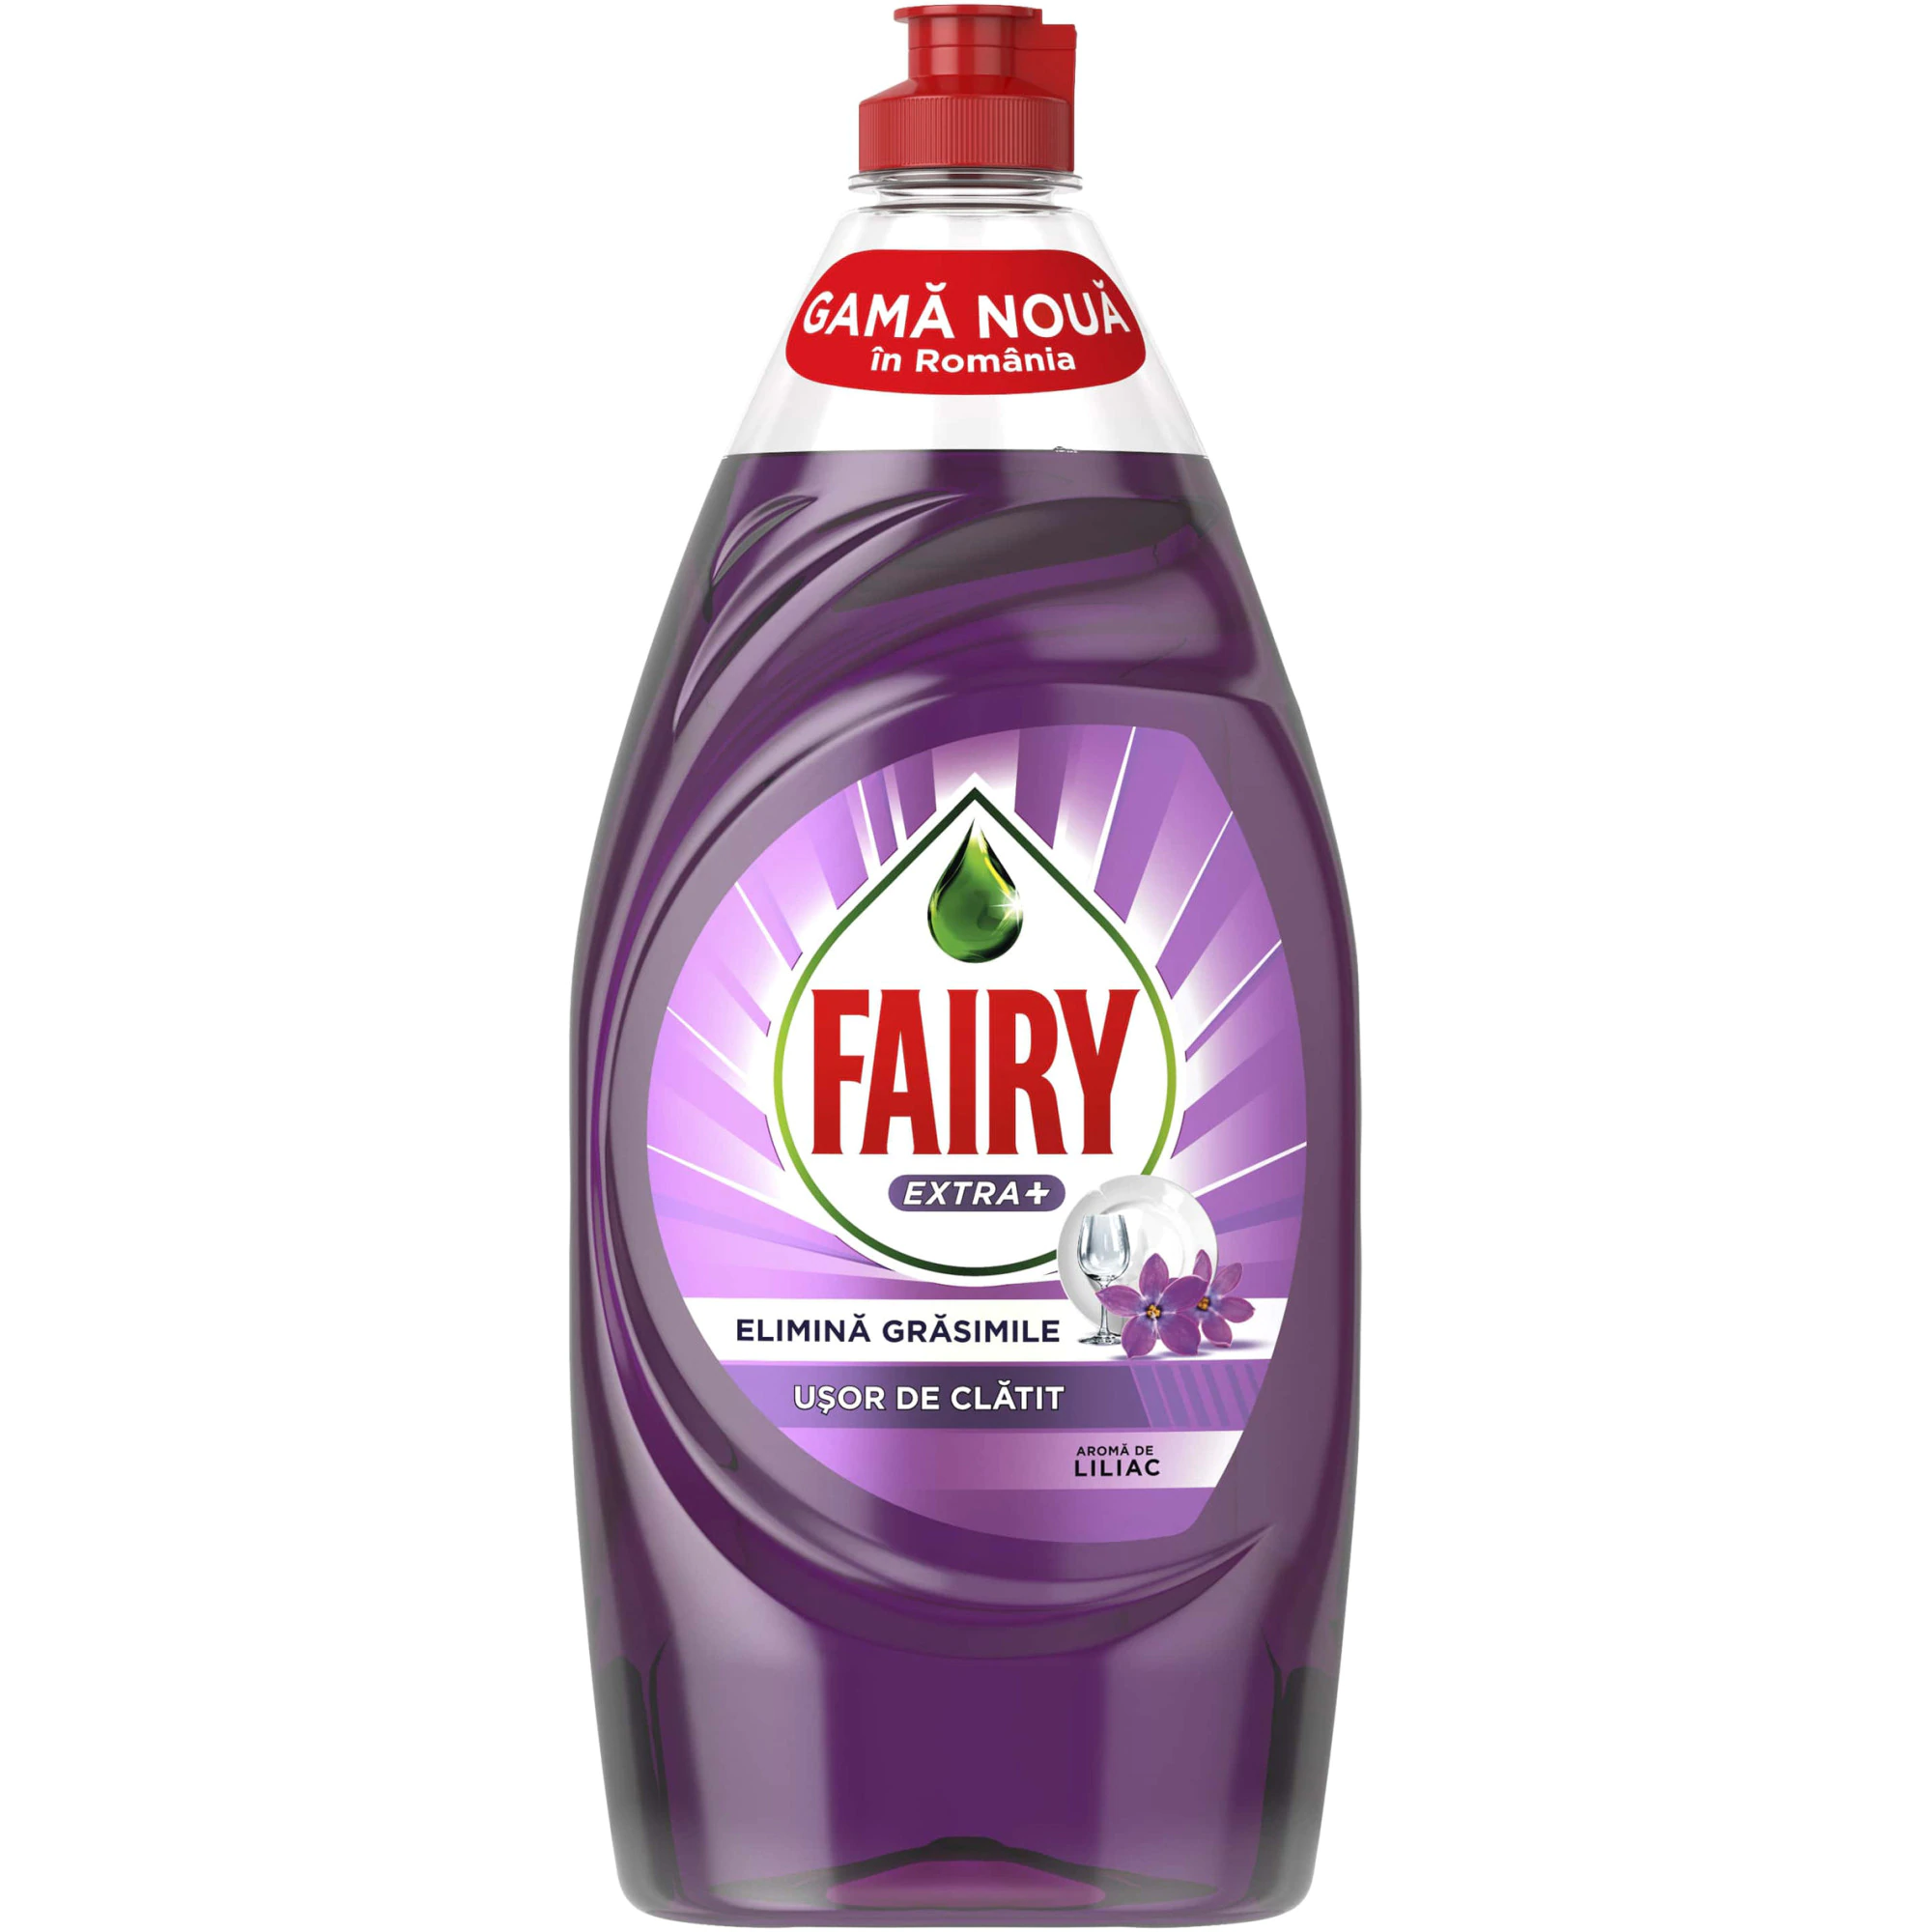 Fairy Extra Plus Liliac 900ml [1]